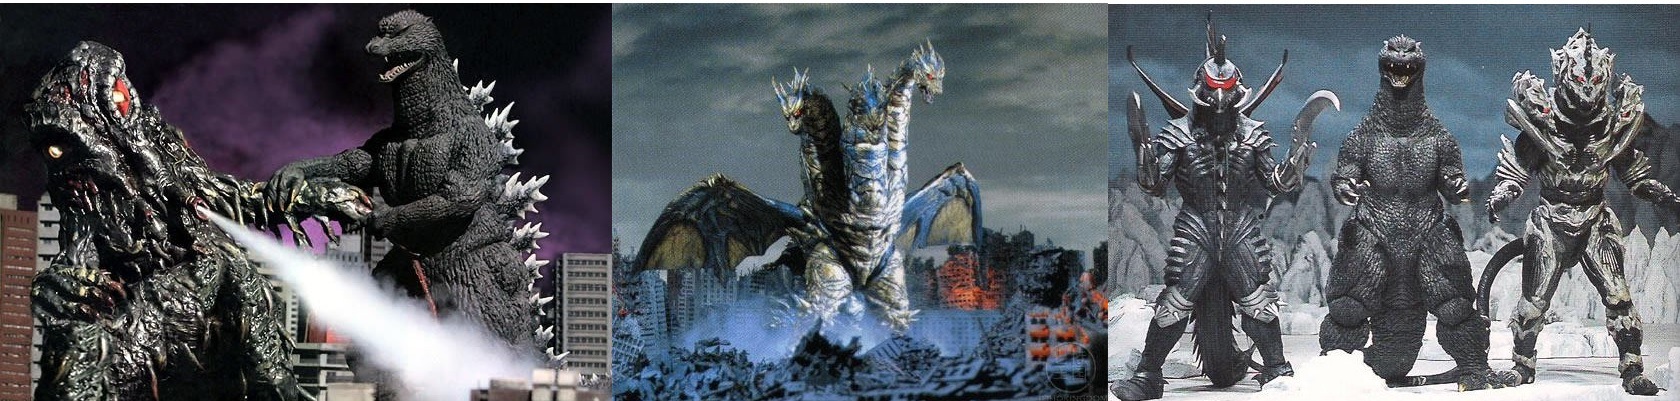 Monster line-up triptych - (1) Godzilla vs Hedorah the Smog Monster; (2) King Ghidorah; (3) Gigan, Godzilla, Monster X from Godzilla Final Wars (2004)